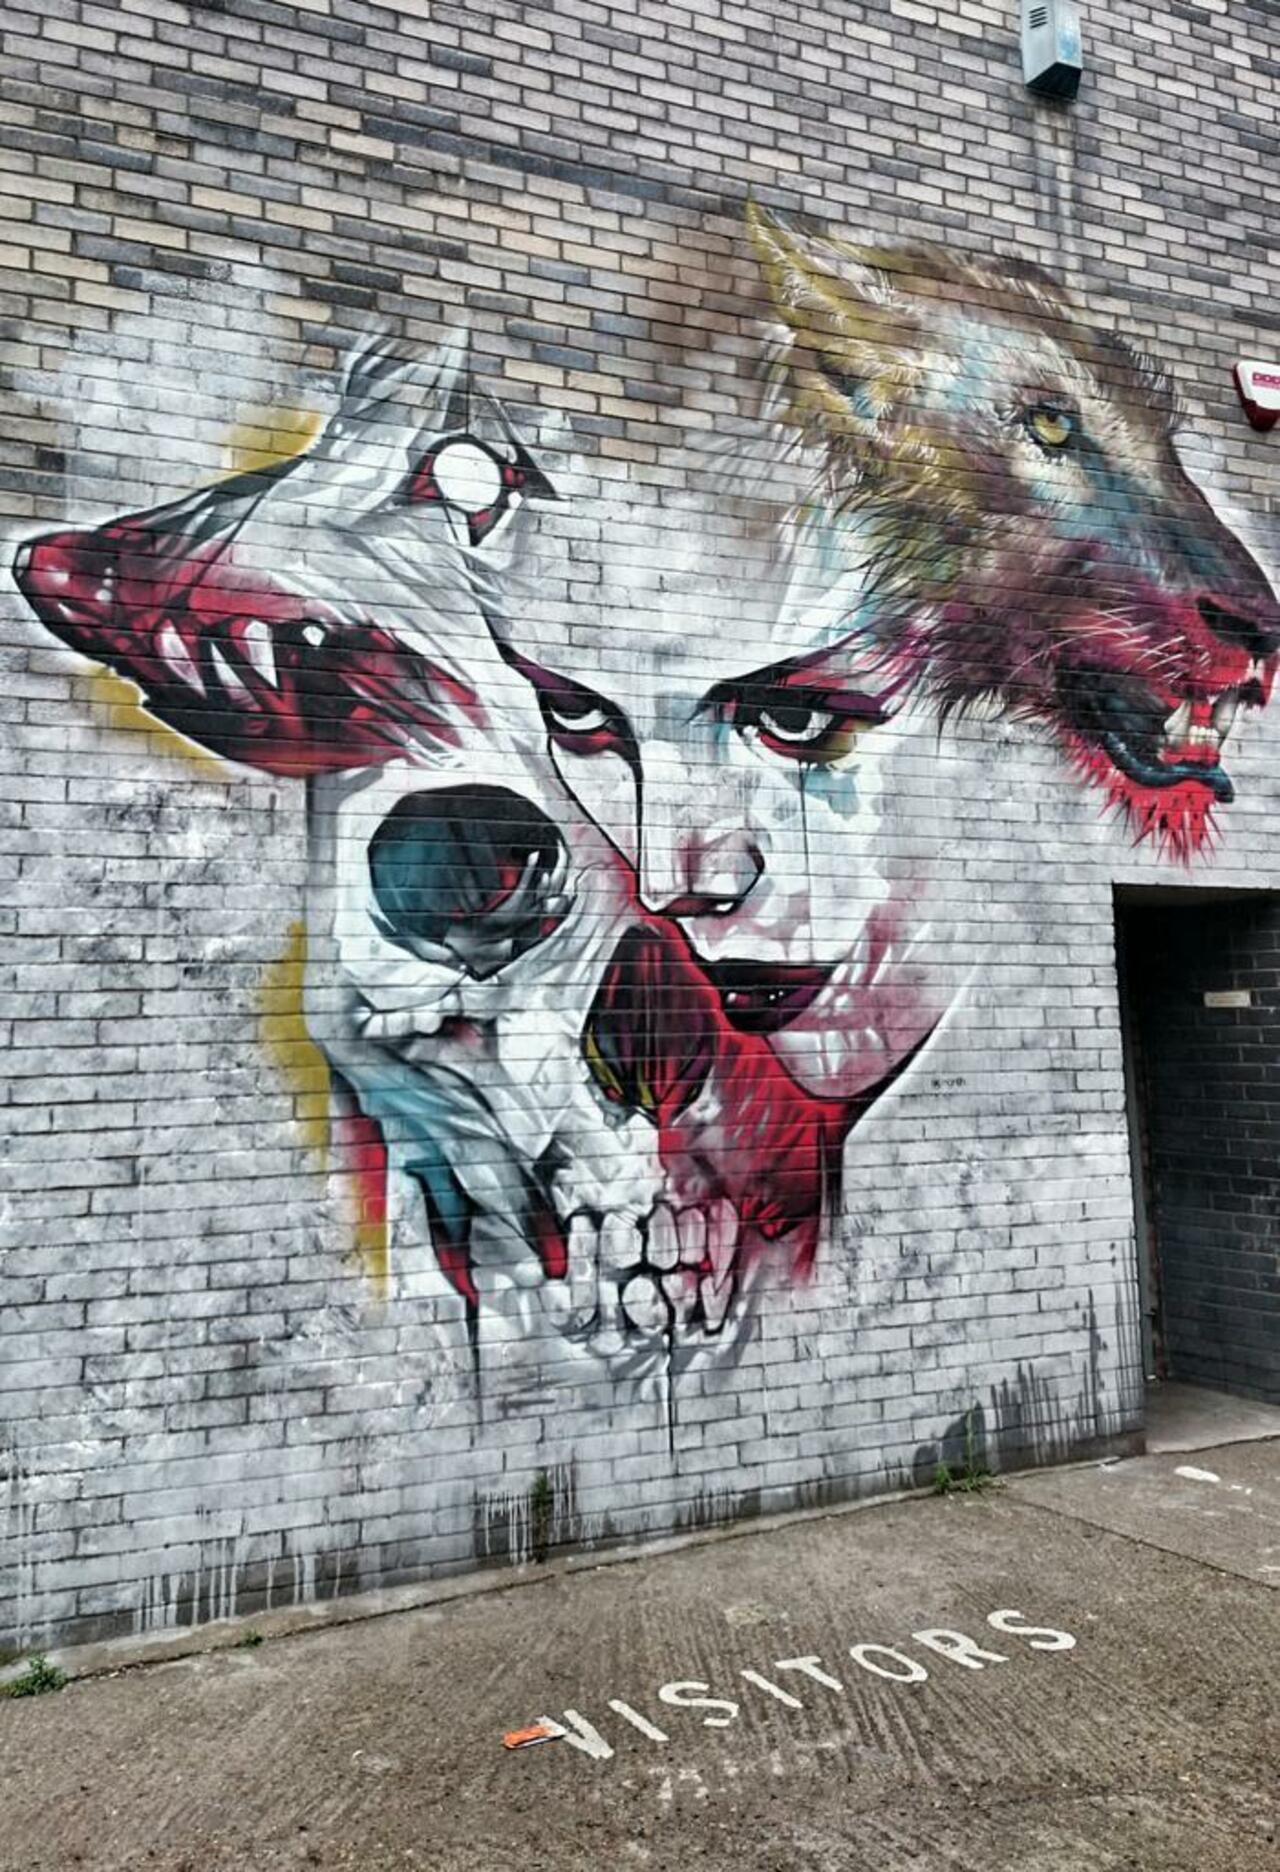 "@spectrum12345: #Streetart #shoreditch #urban #London #loveLondon #art #graffiti #mural http://t.co/NU3659Laxb" WHOA awesome work